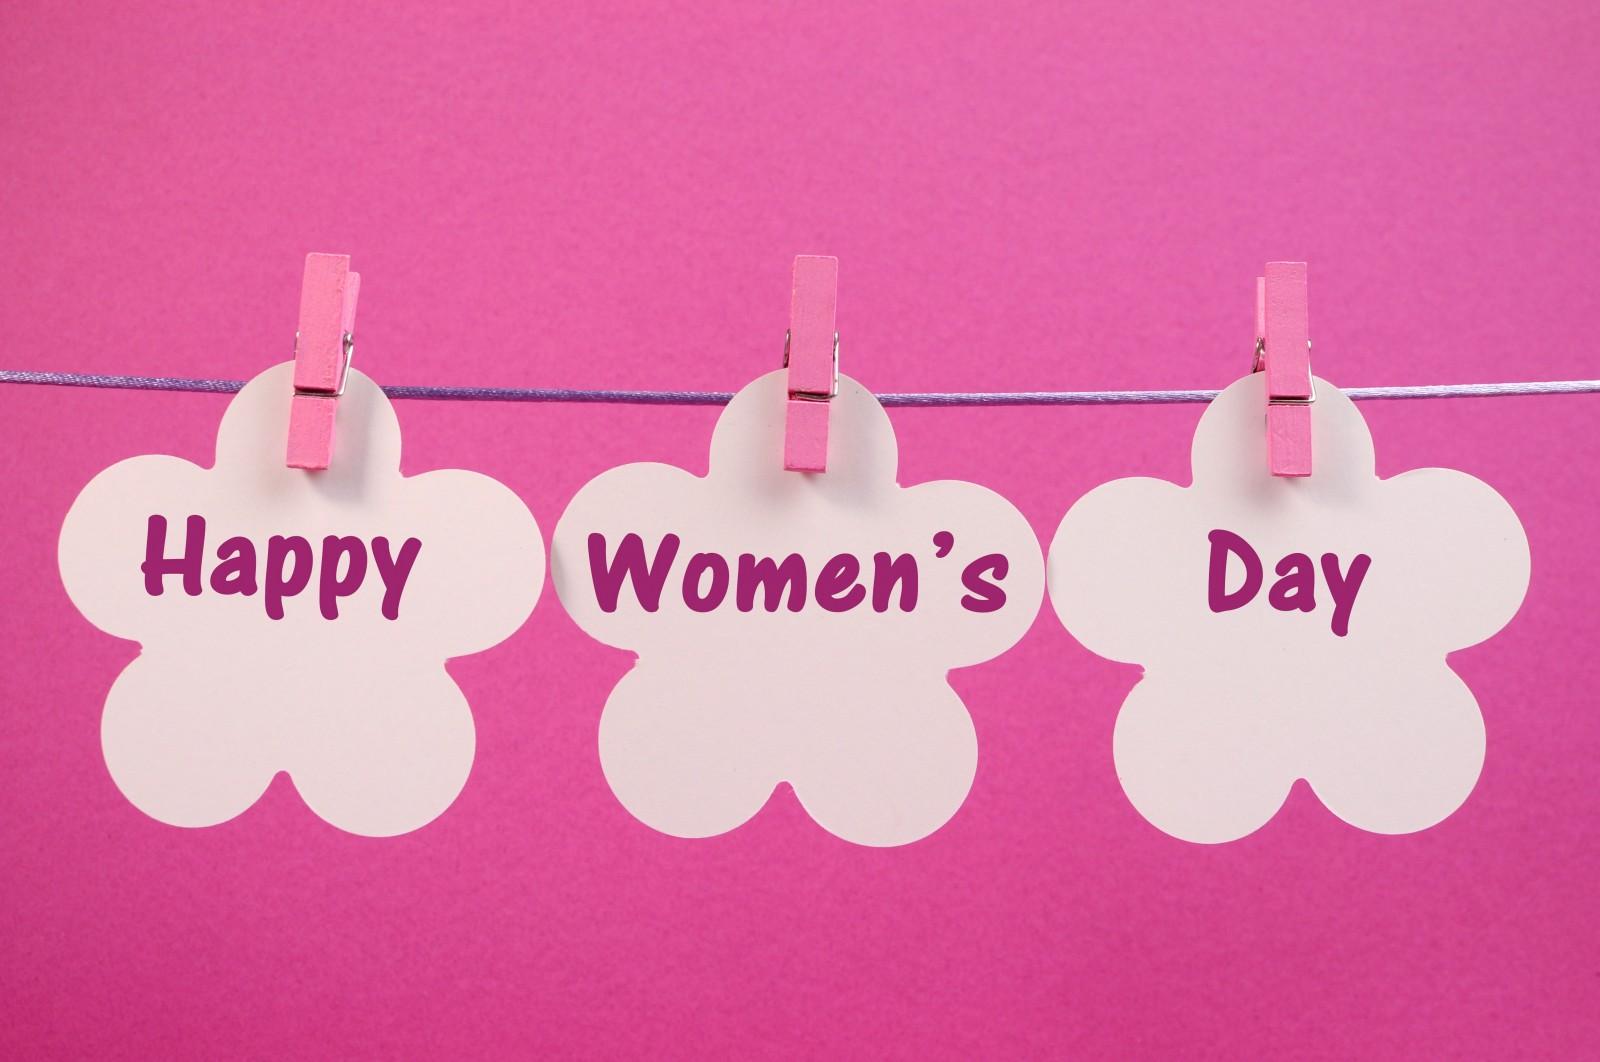 Women's Day Cards, Image, Wallpaper • Elsoar